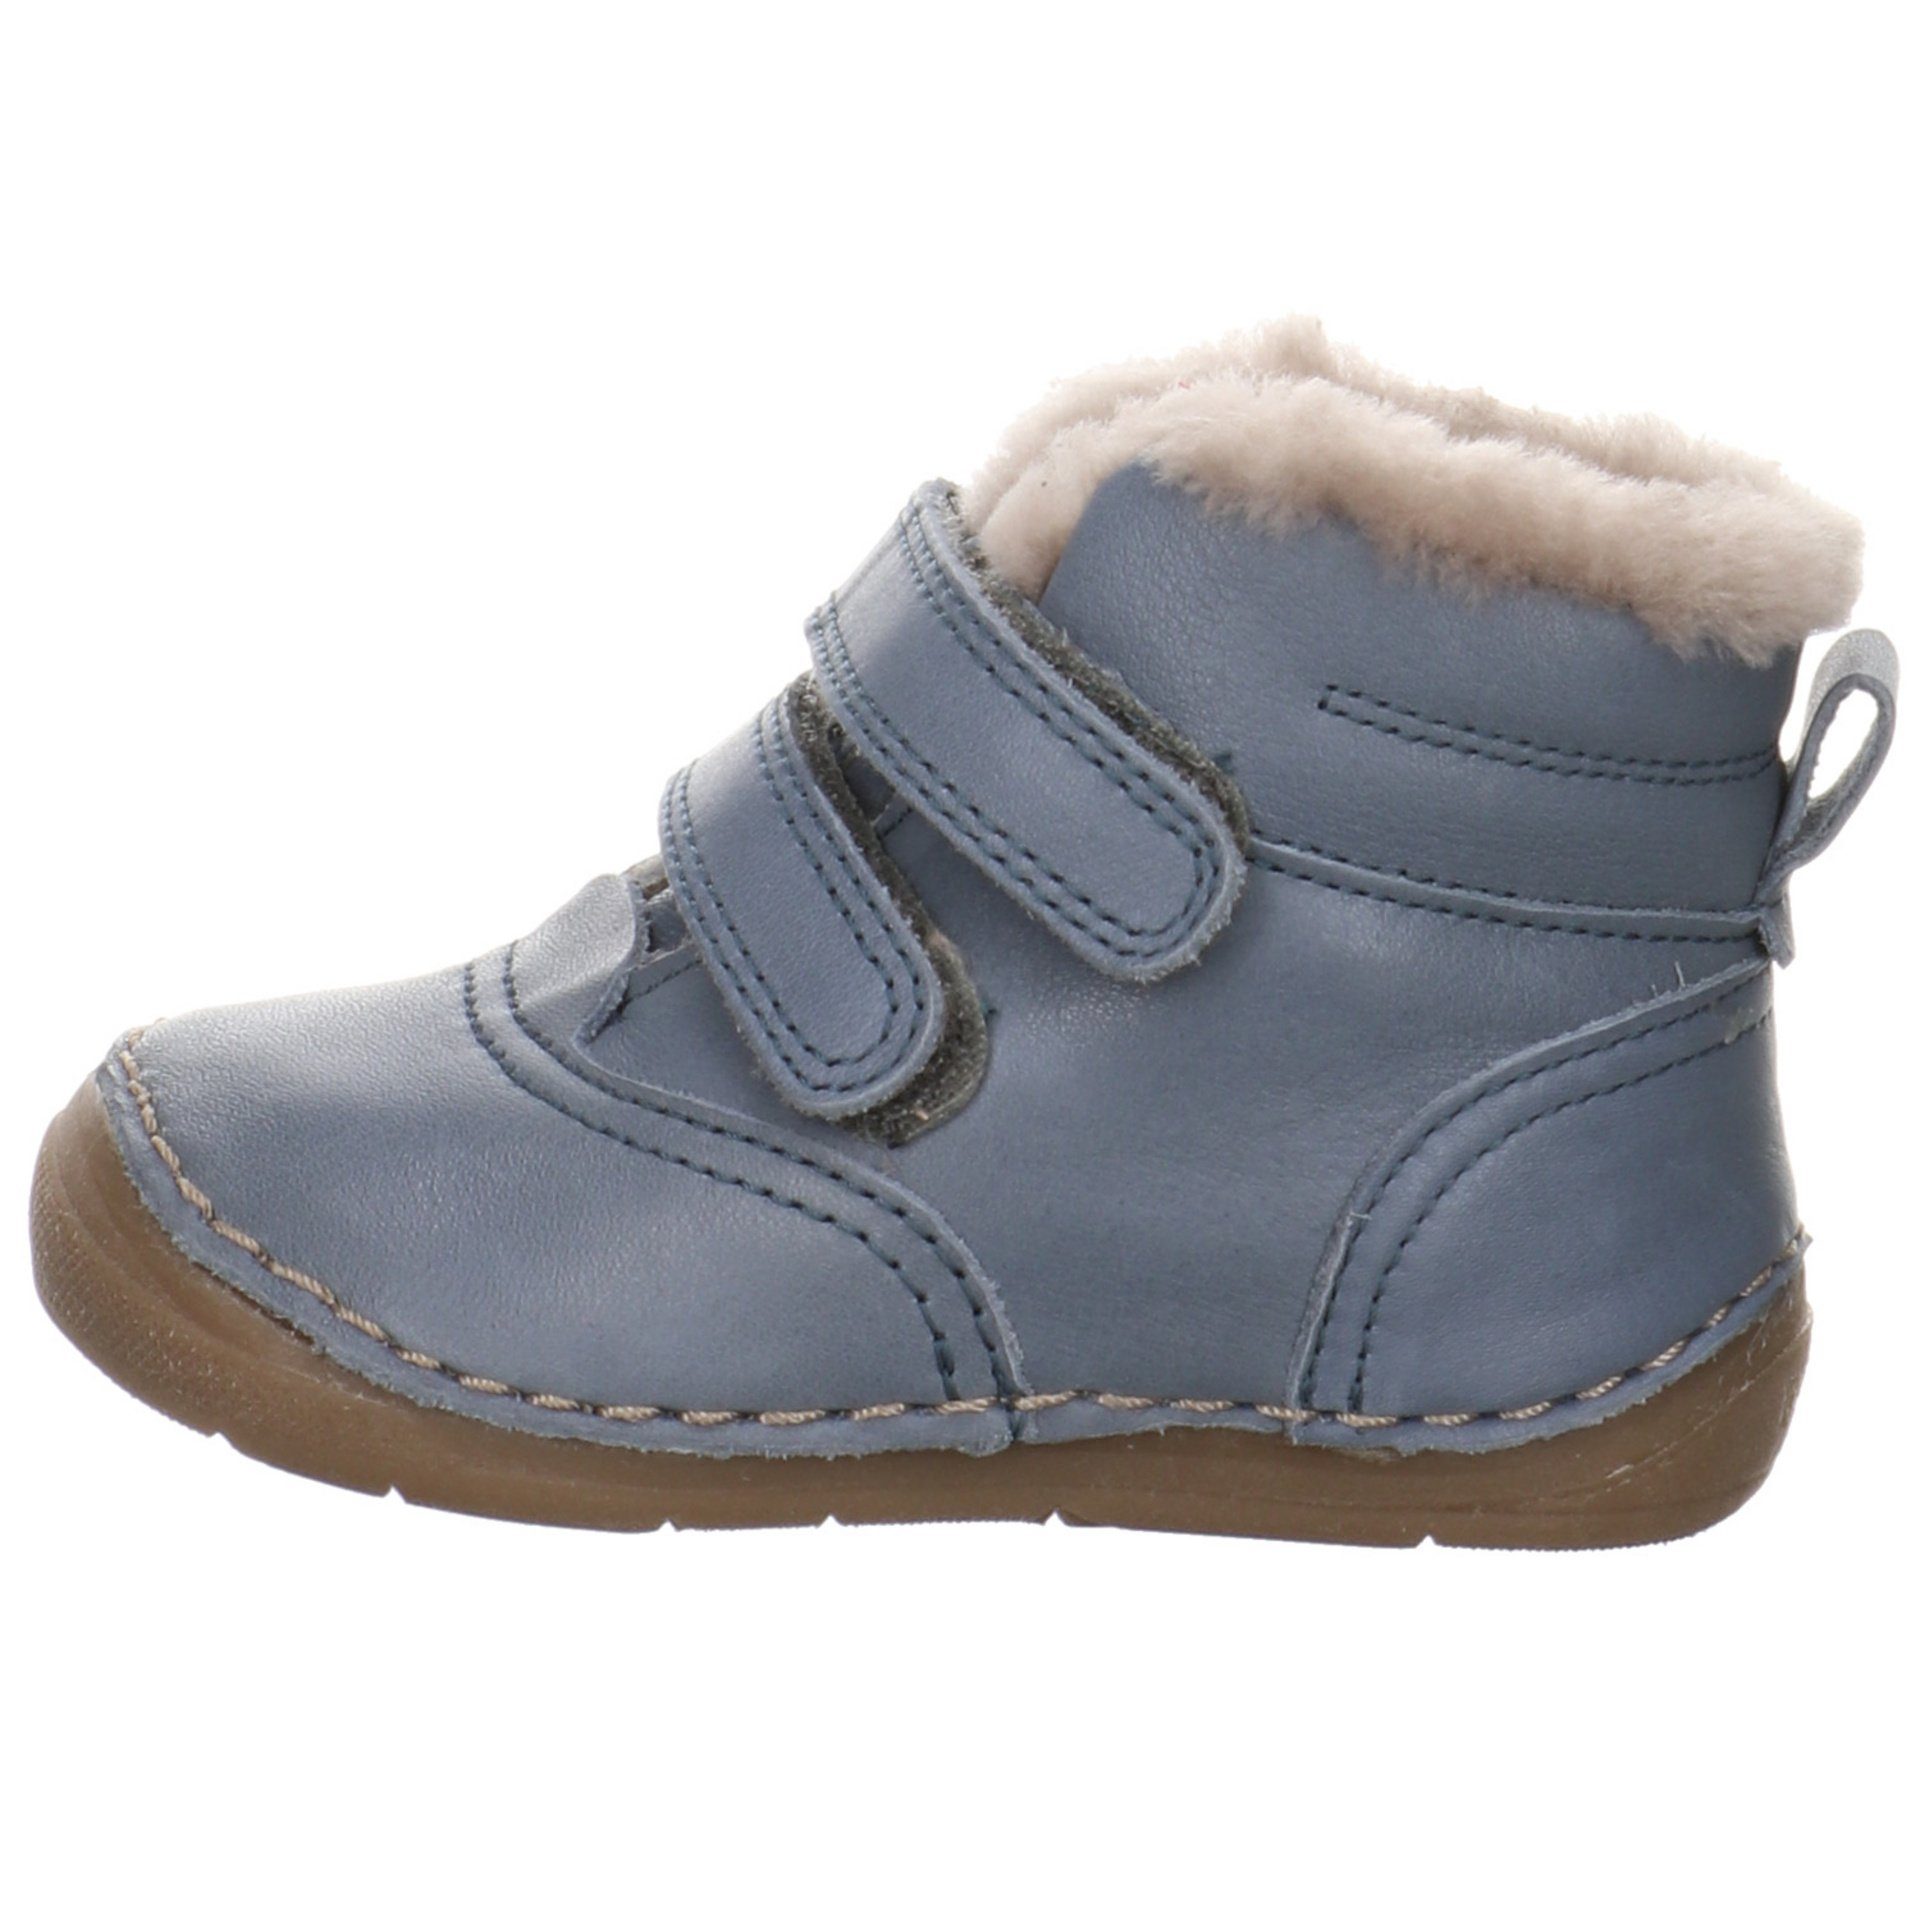 Paix Baby blau-mittel froddo® Stiefel Lauflernschuhe Boots Krabbelschuhe Lederkombination